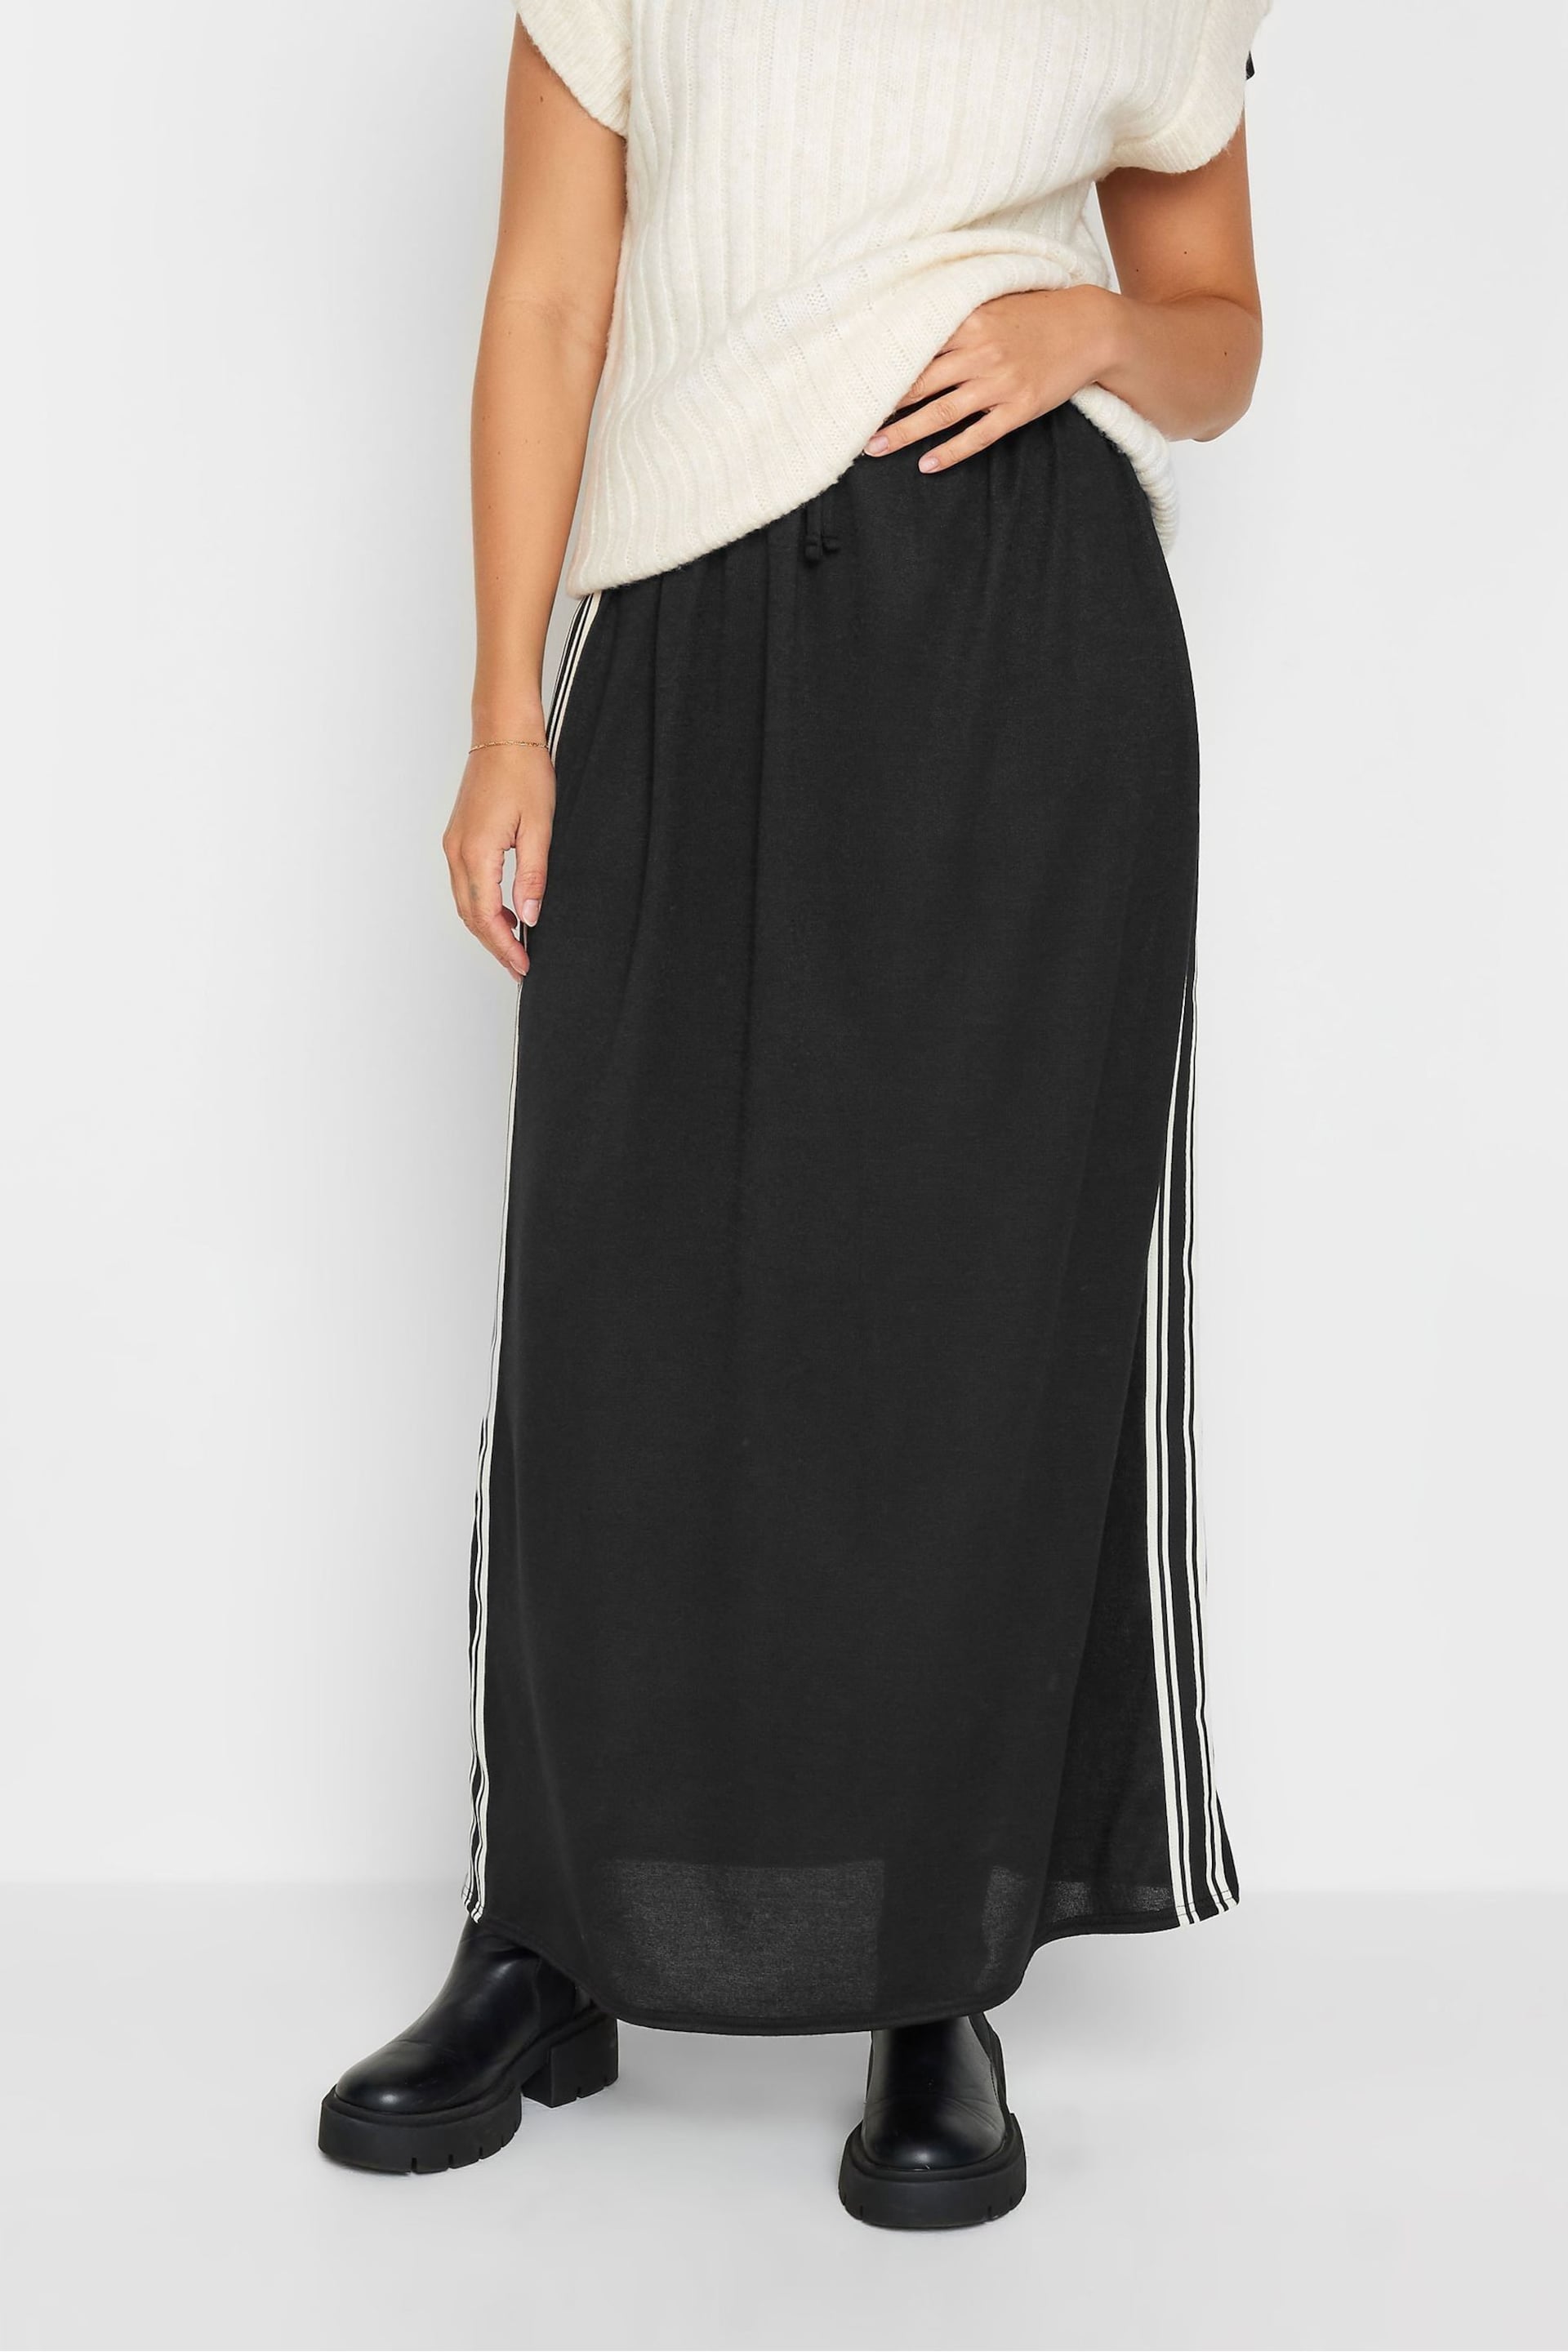 Long Tall Sally Black Stripe Panel Skirt - Image 1 of 3